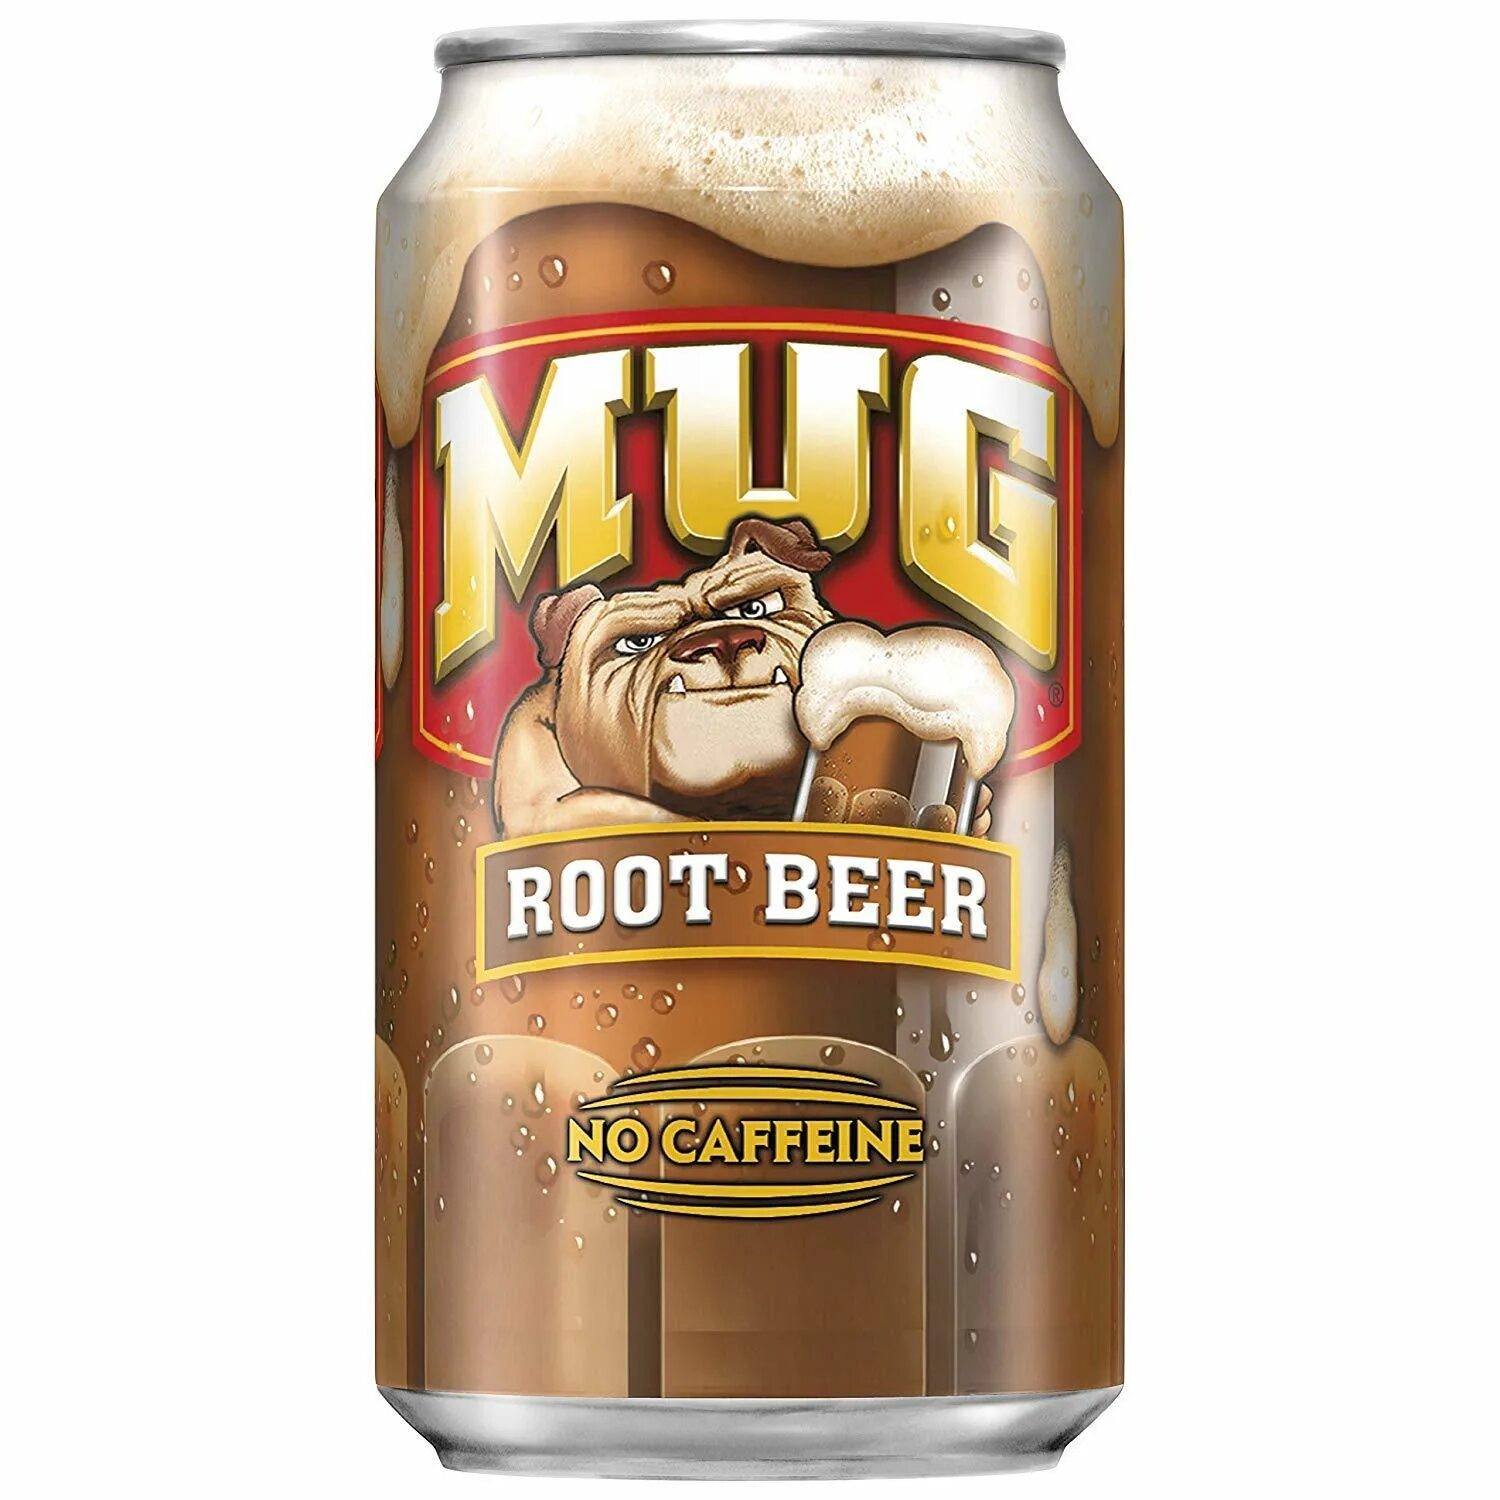 Корневое пиво. Mug root Beer 355мл напиток. Mug root Beer Корневое пиво. ГАЗ напиток Mug root Beer 0,355 США. Root Beer газировка.